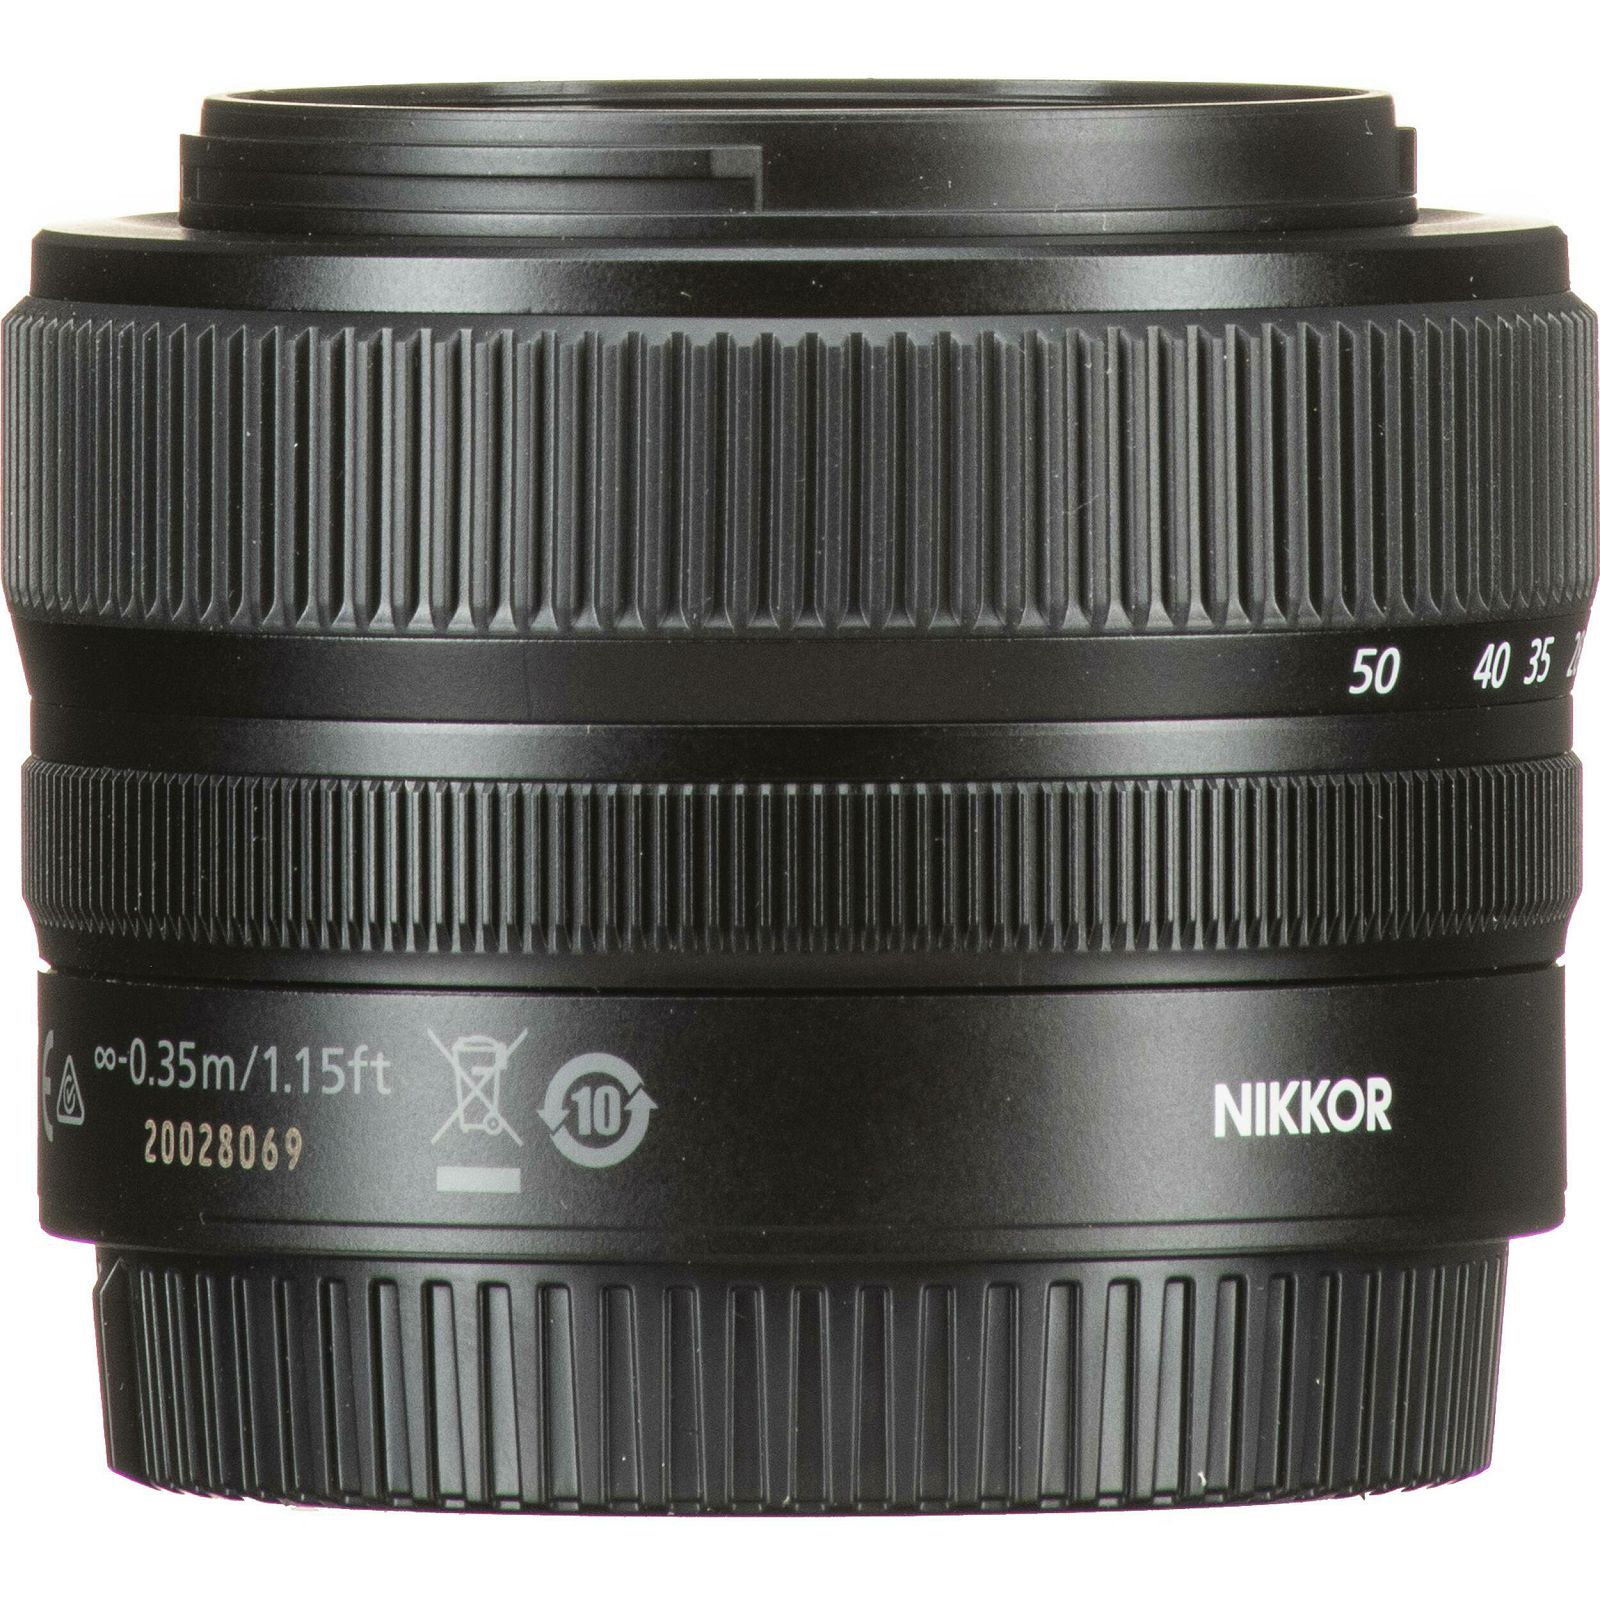 Nikon Z 24-50mm f/4-6.3 objektiv Nikkor 24-50 F4-6.3 (JMA712DA)